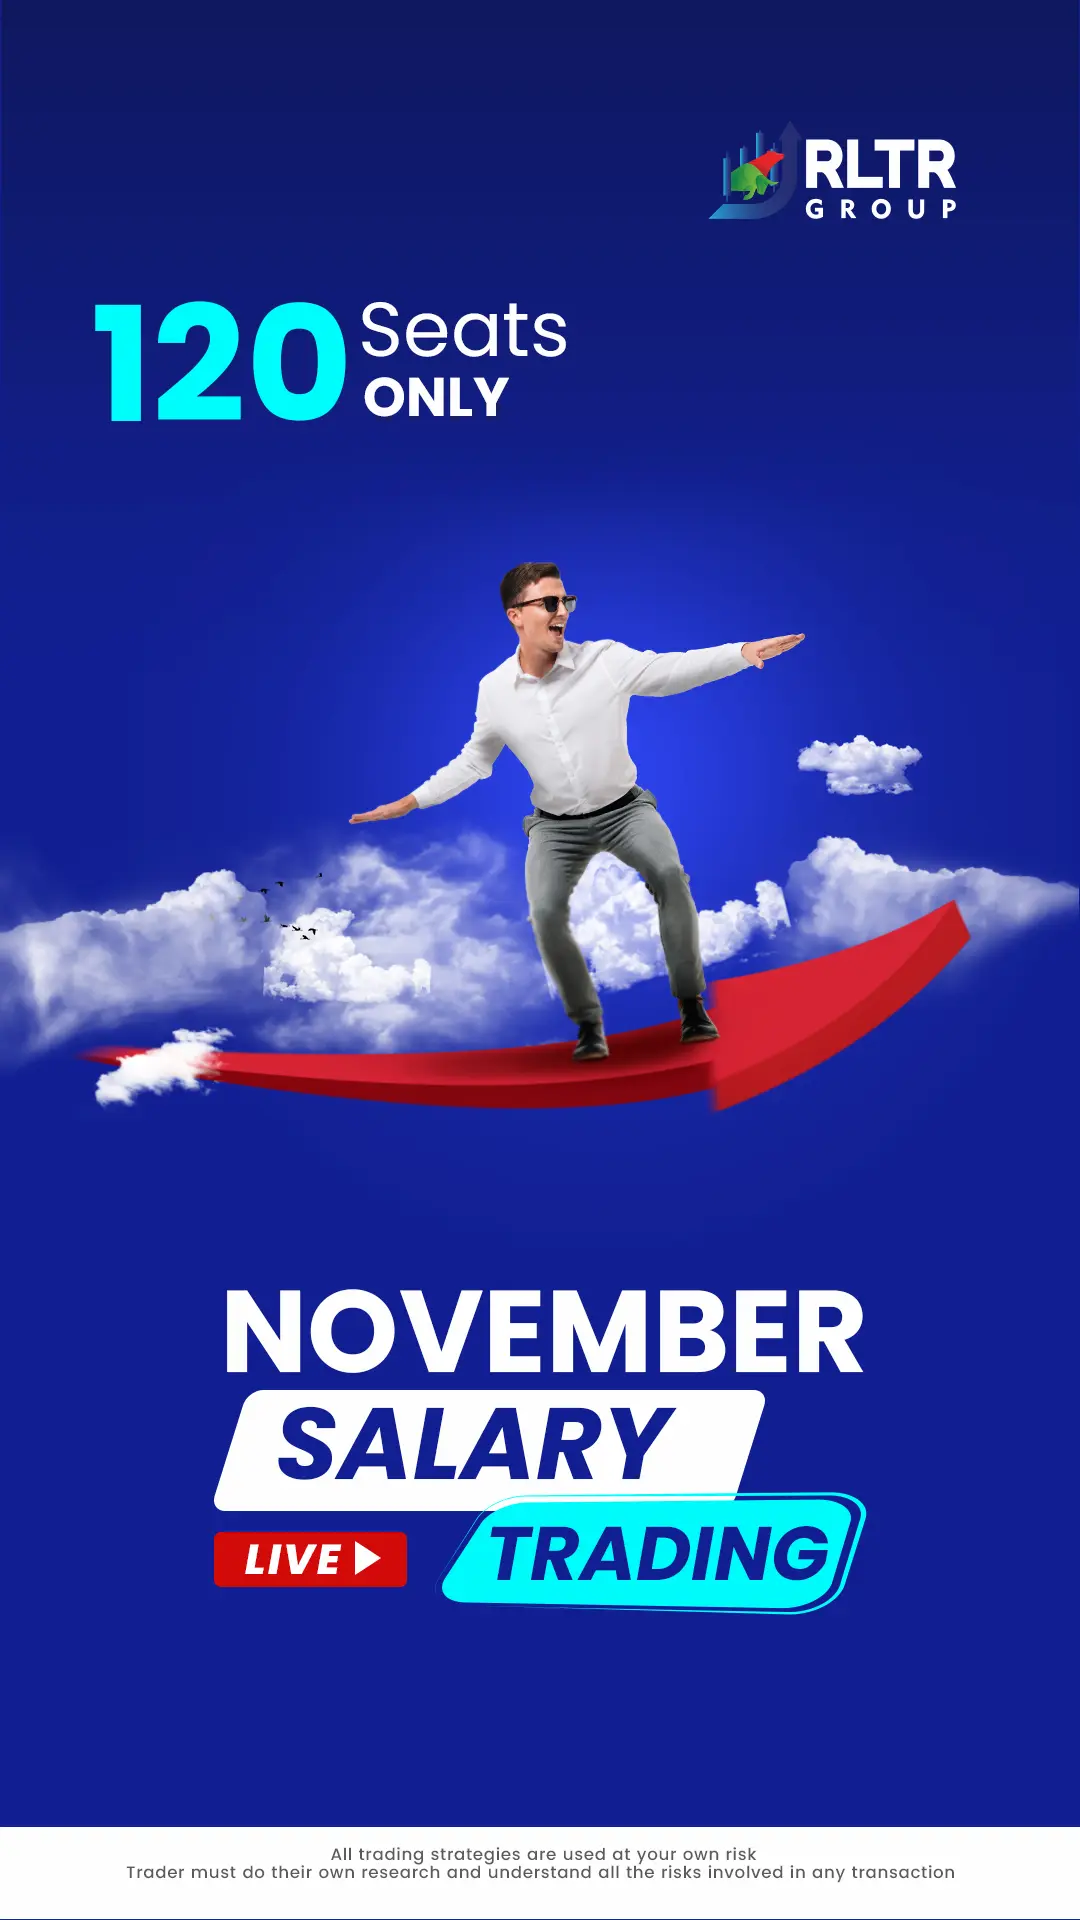 November-salary-tarding-2-1920.webp